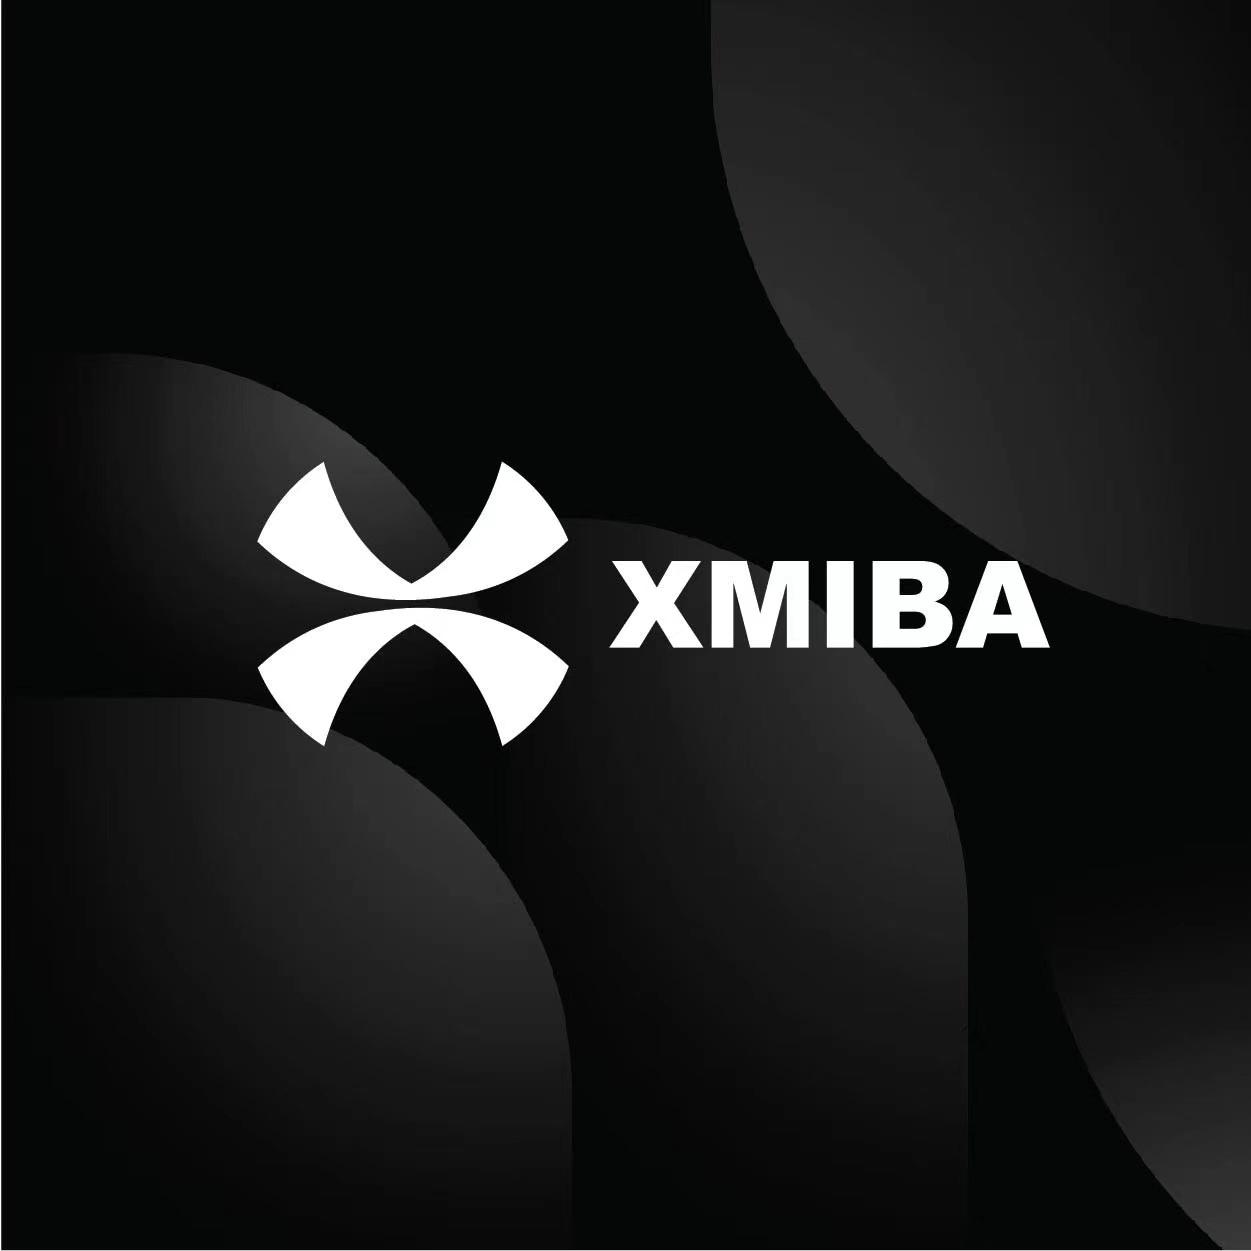 xmiba(HR)'s images